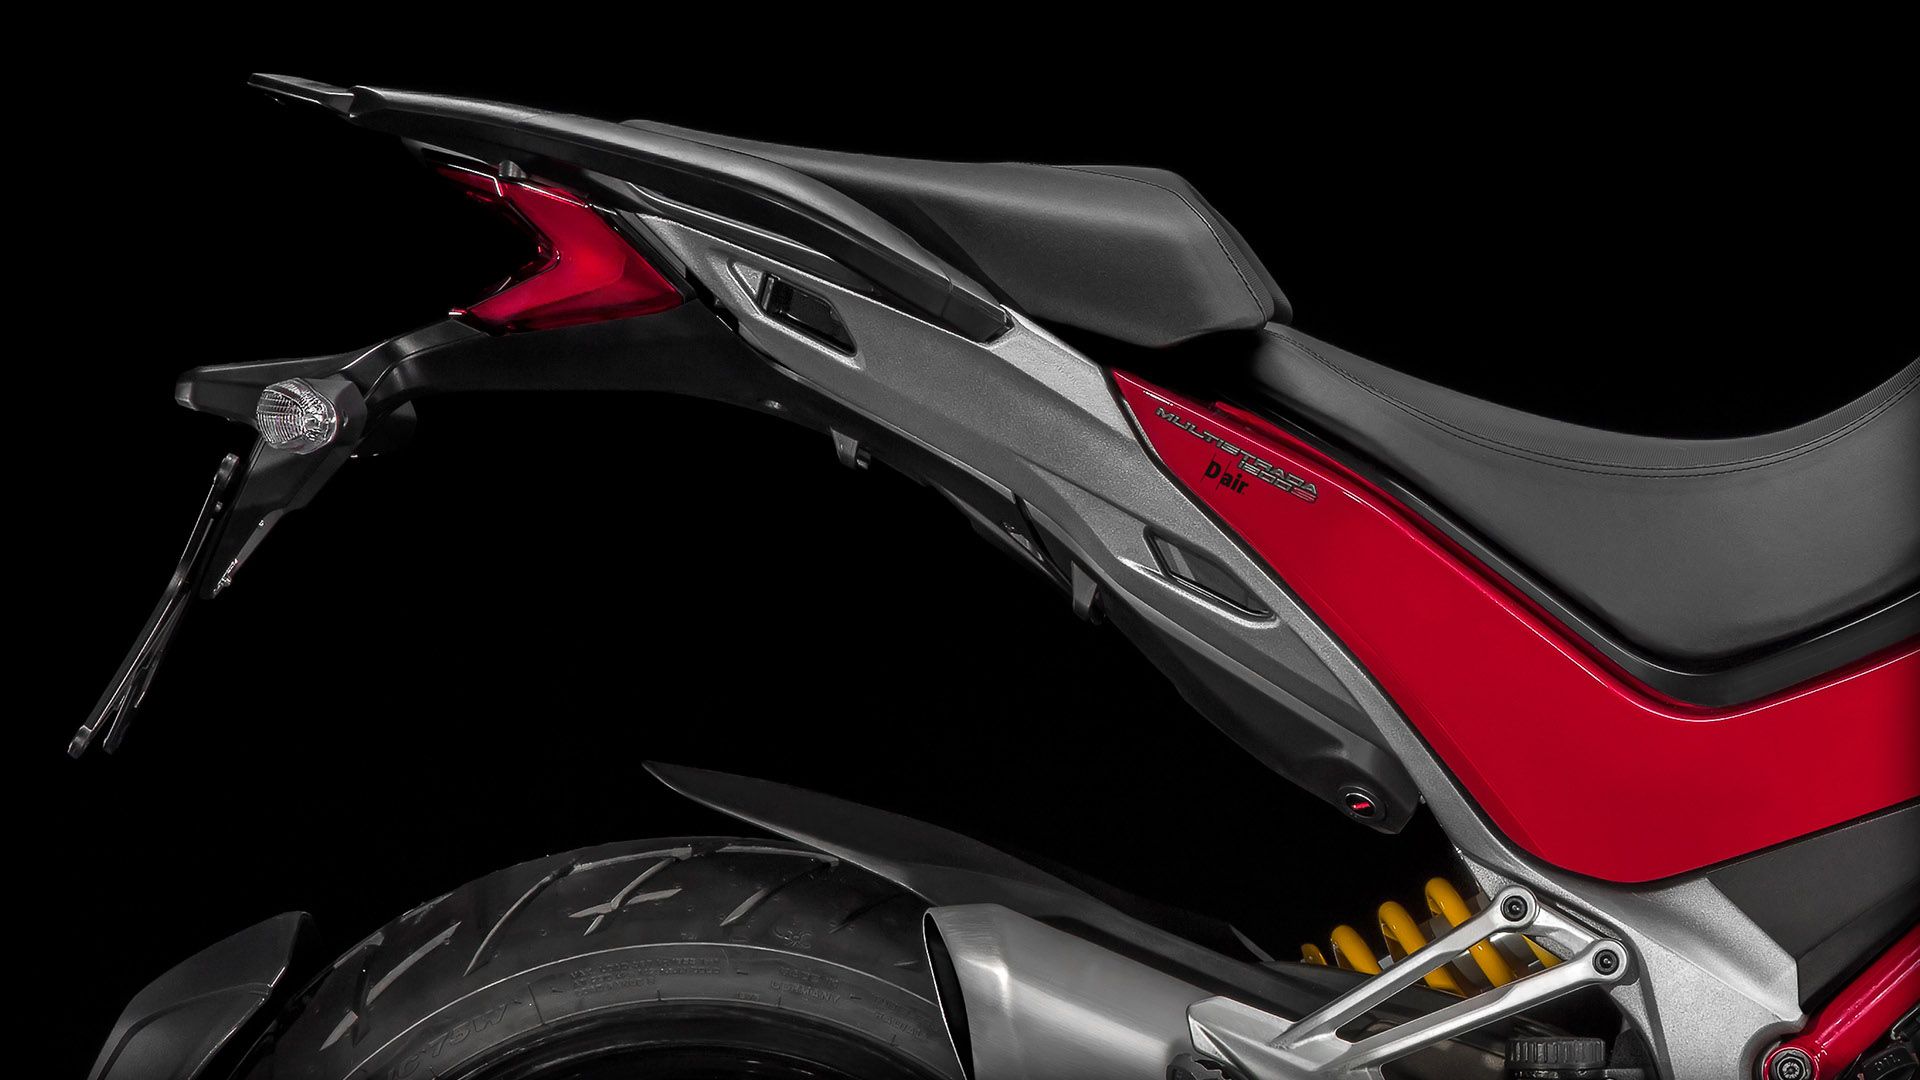 2015 Ducati Multistrada 1200 S D|air